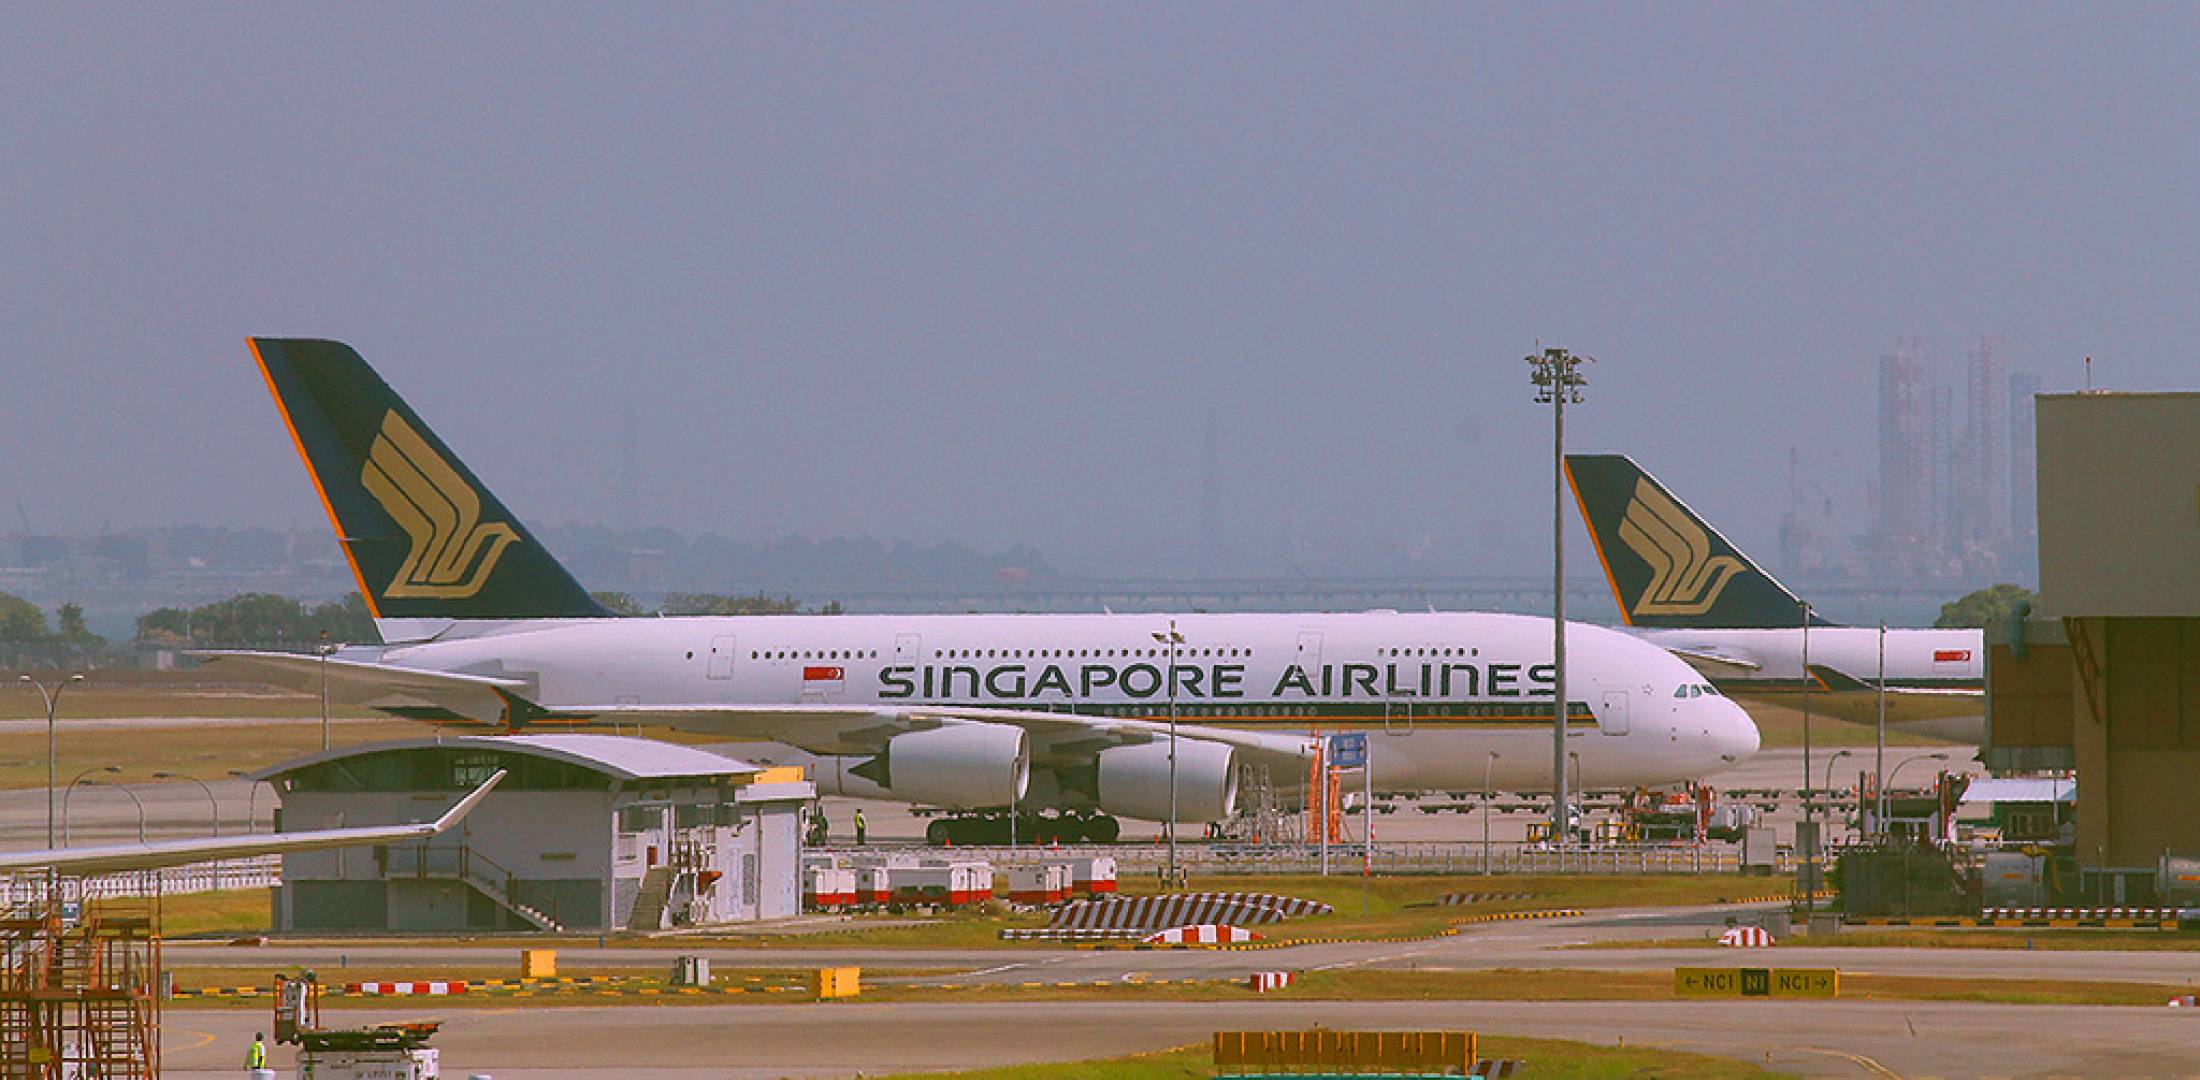 Singapore International Airport Changi